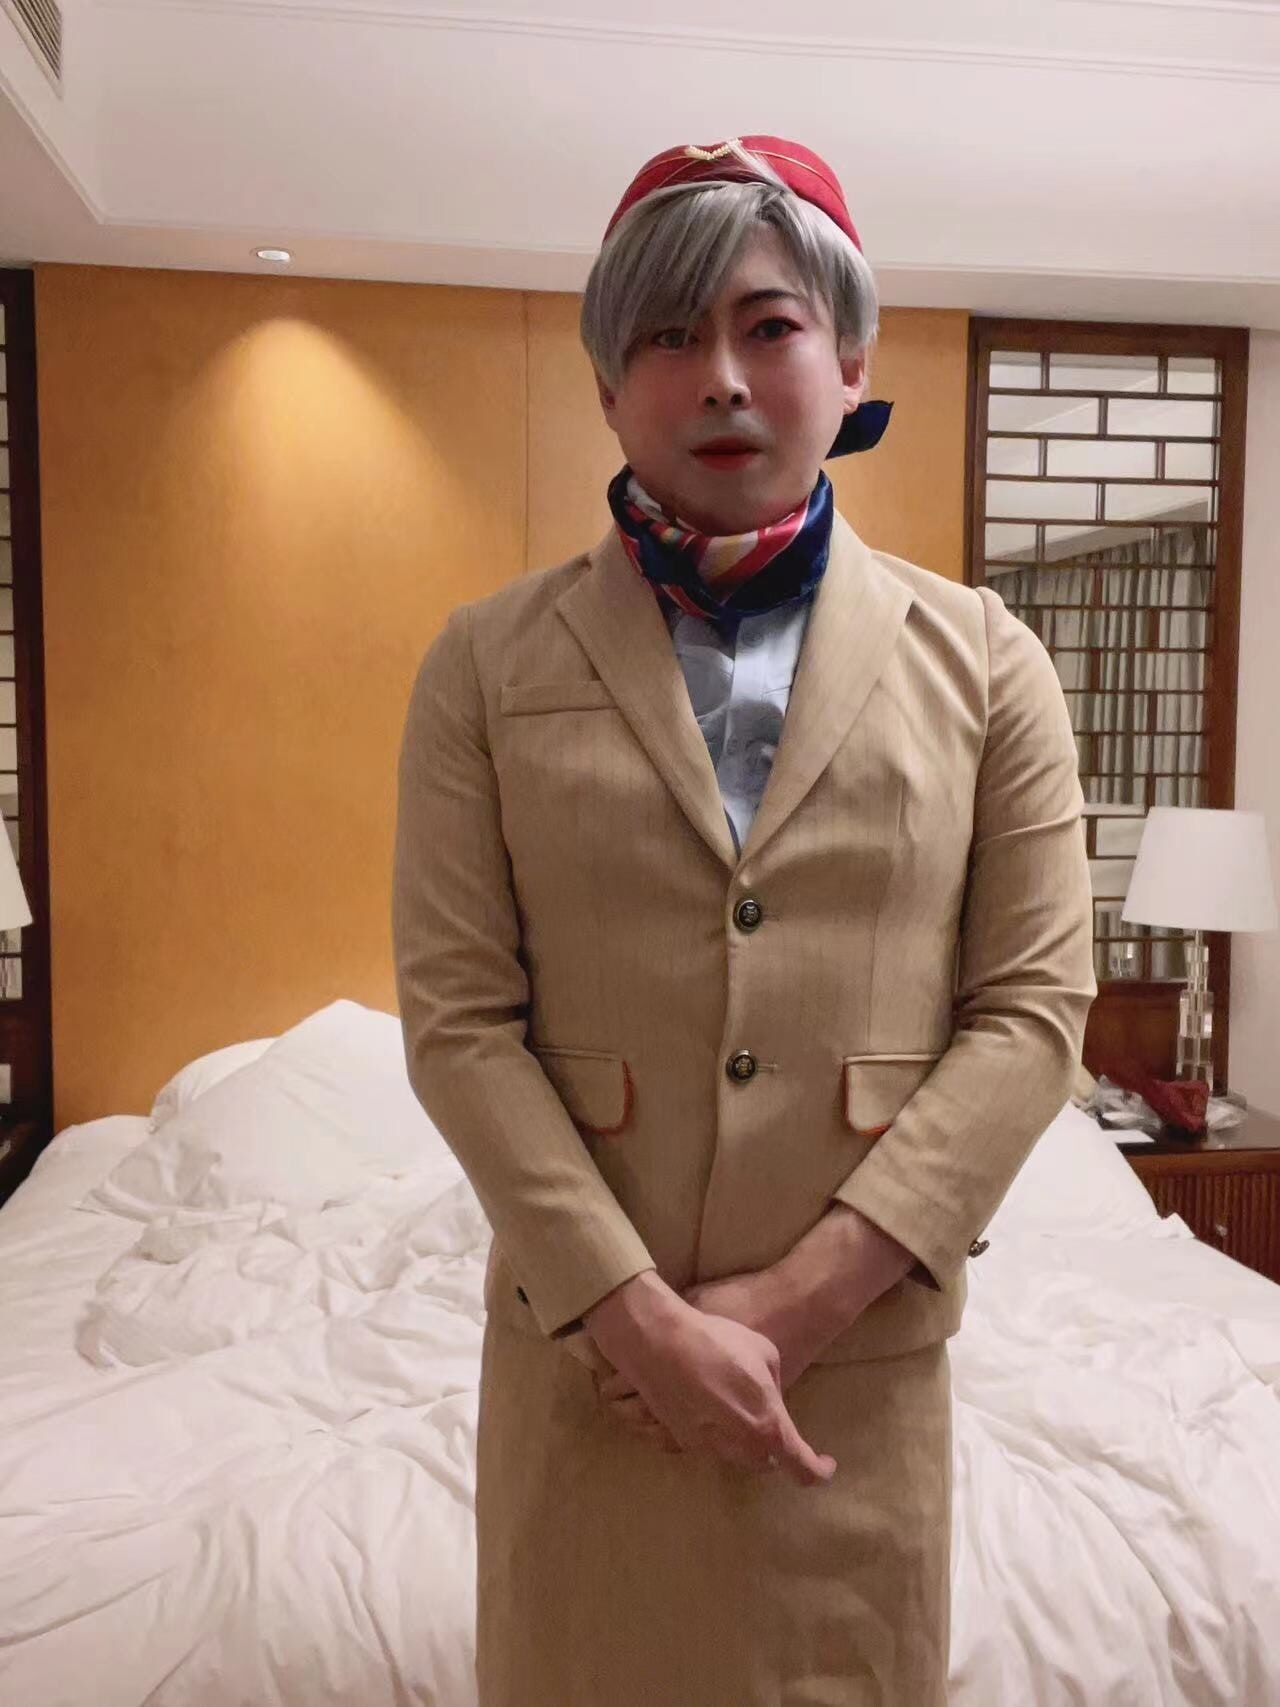 Asian femboy sissy in Emirates flight attendant dress #3